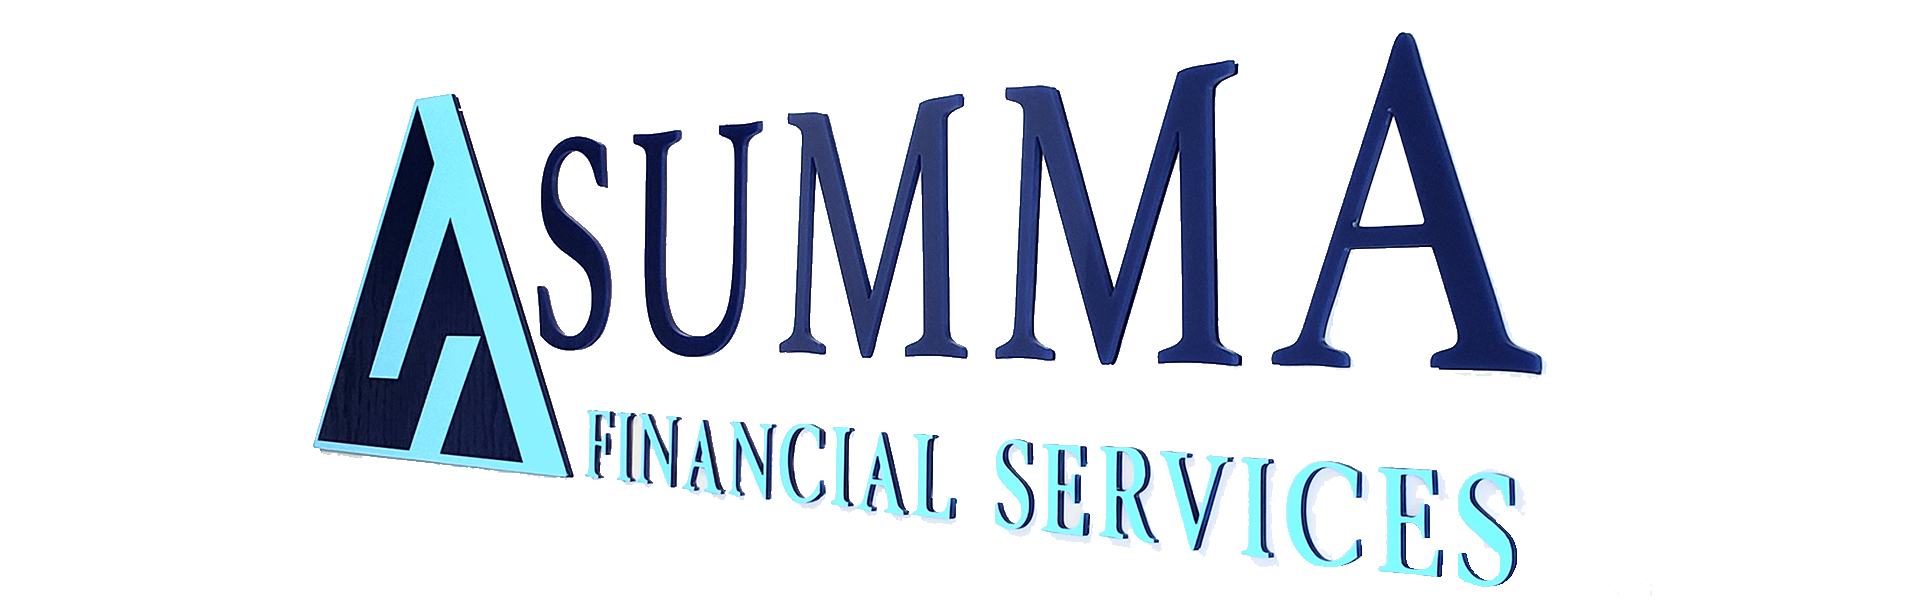 summa-financial-services